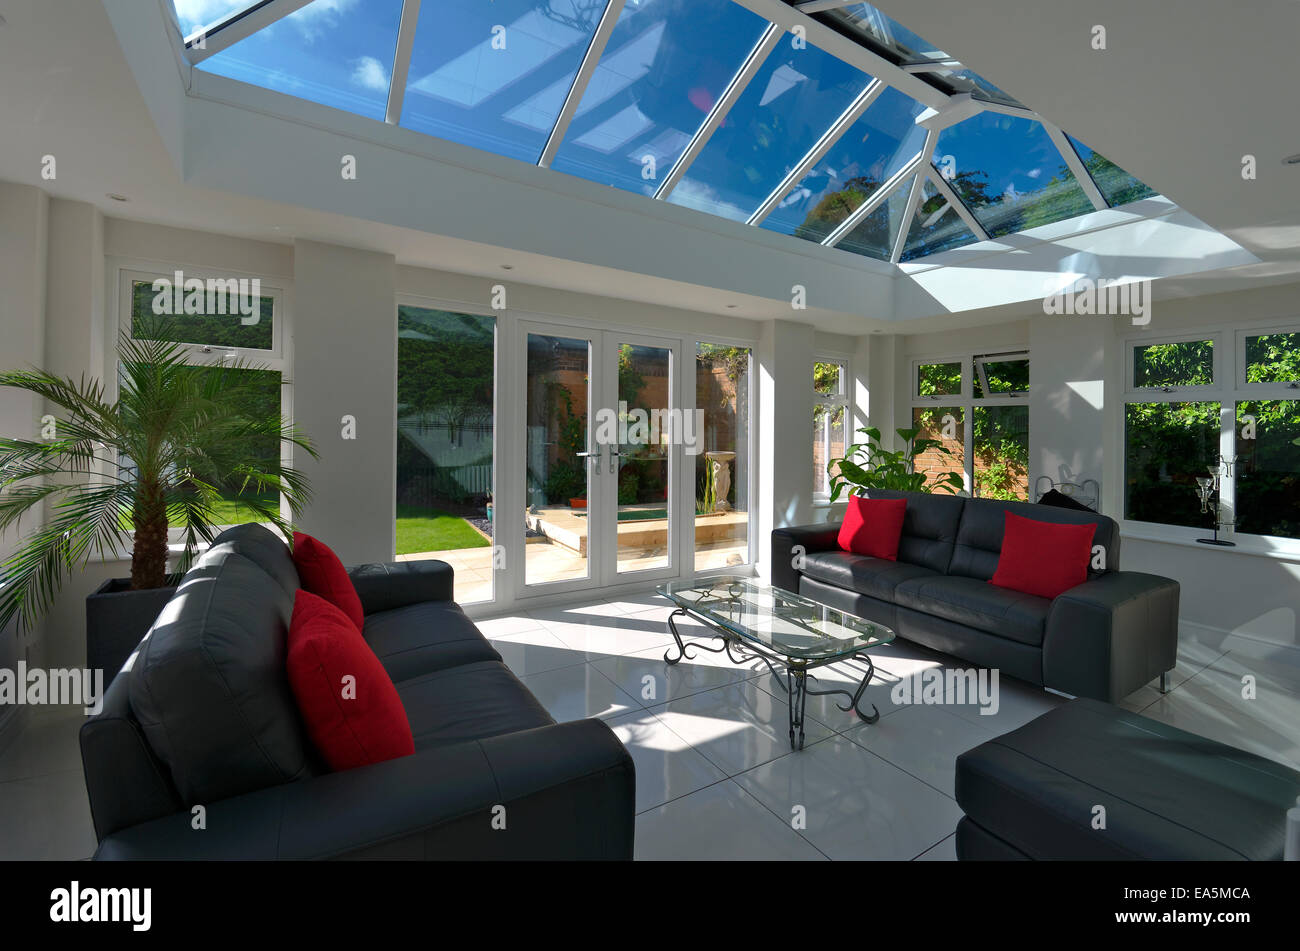 Orangery conservatorio estilo interior home improvement Foto de stock